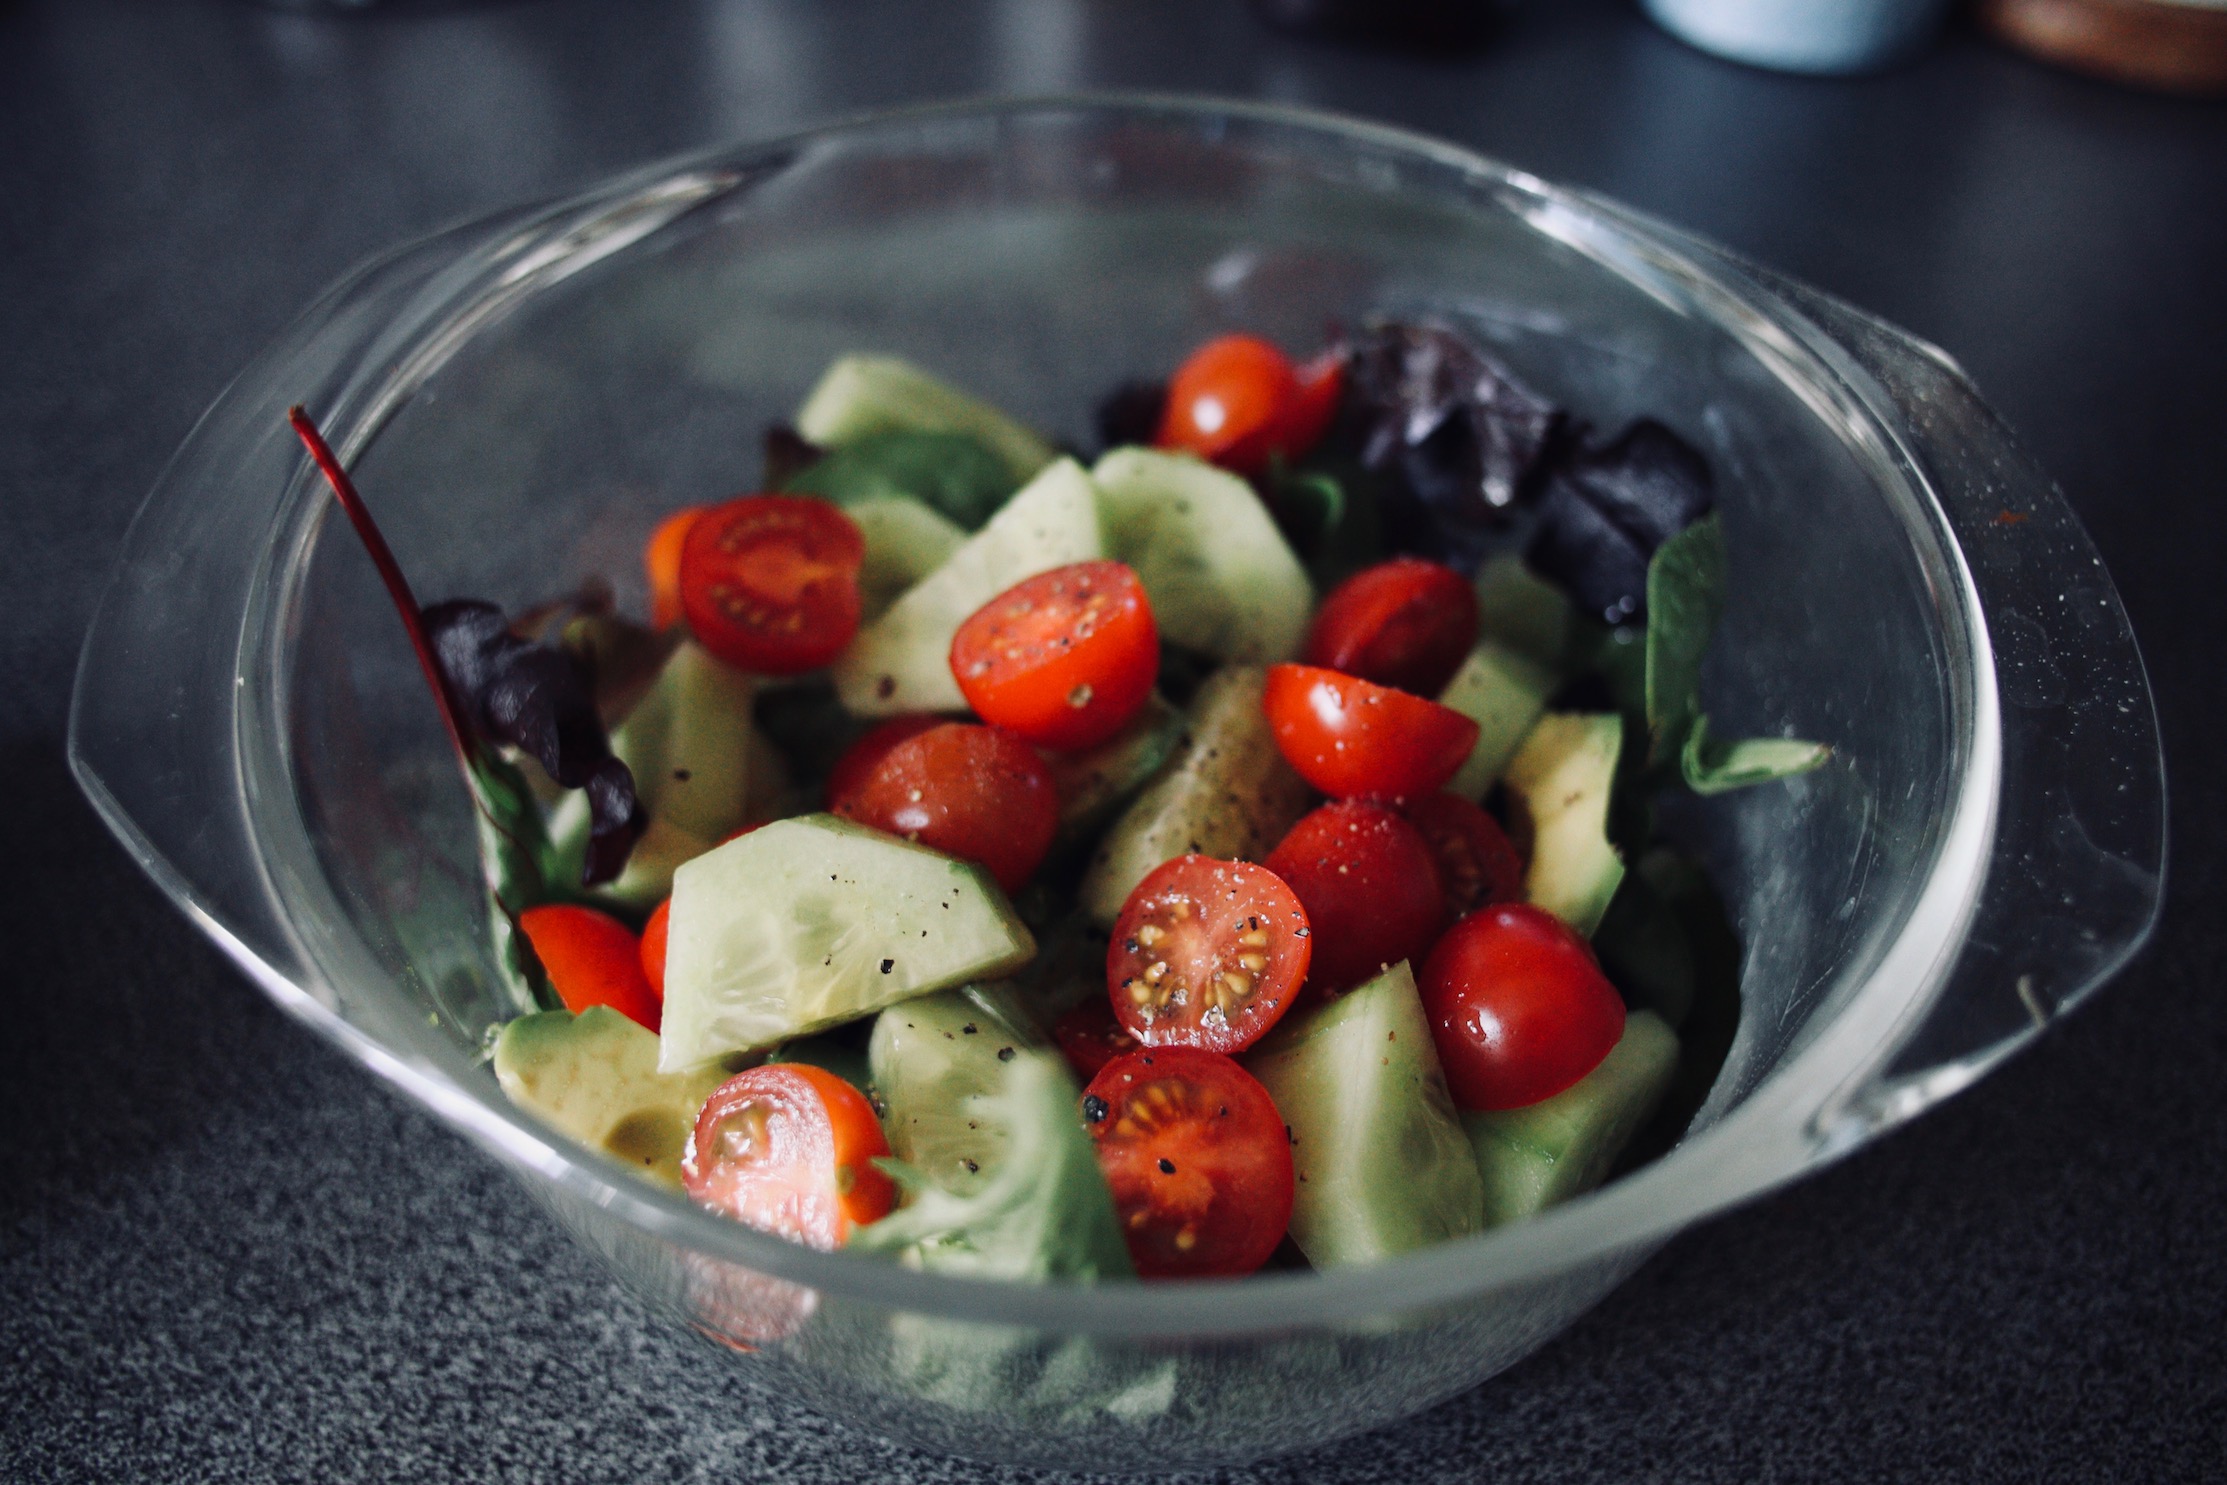 Fully raw option: Tomato, Cucumber & Mixed leaf salad